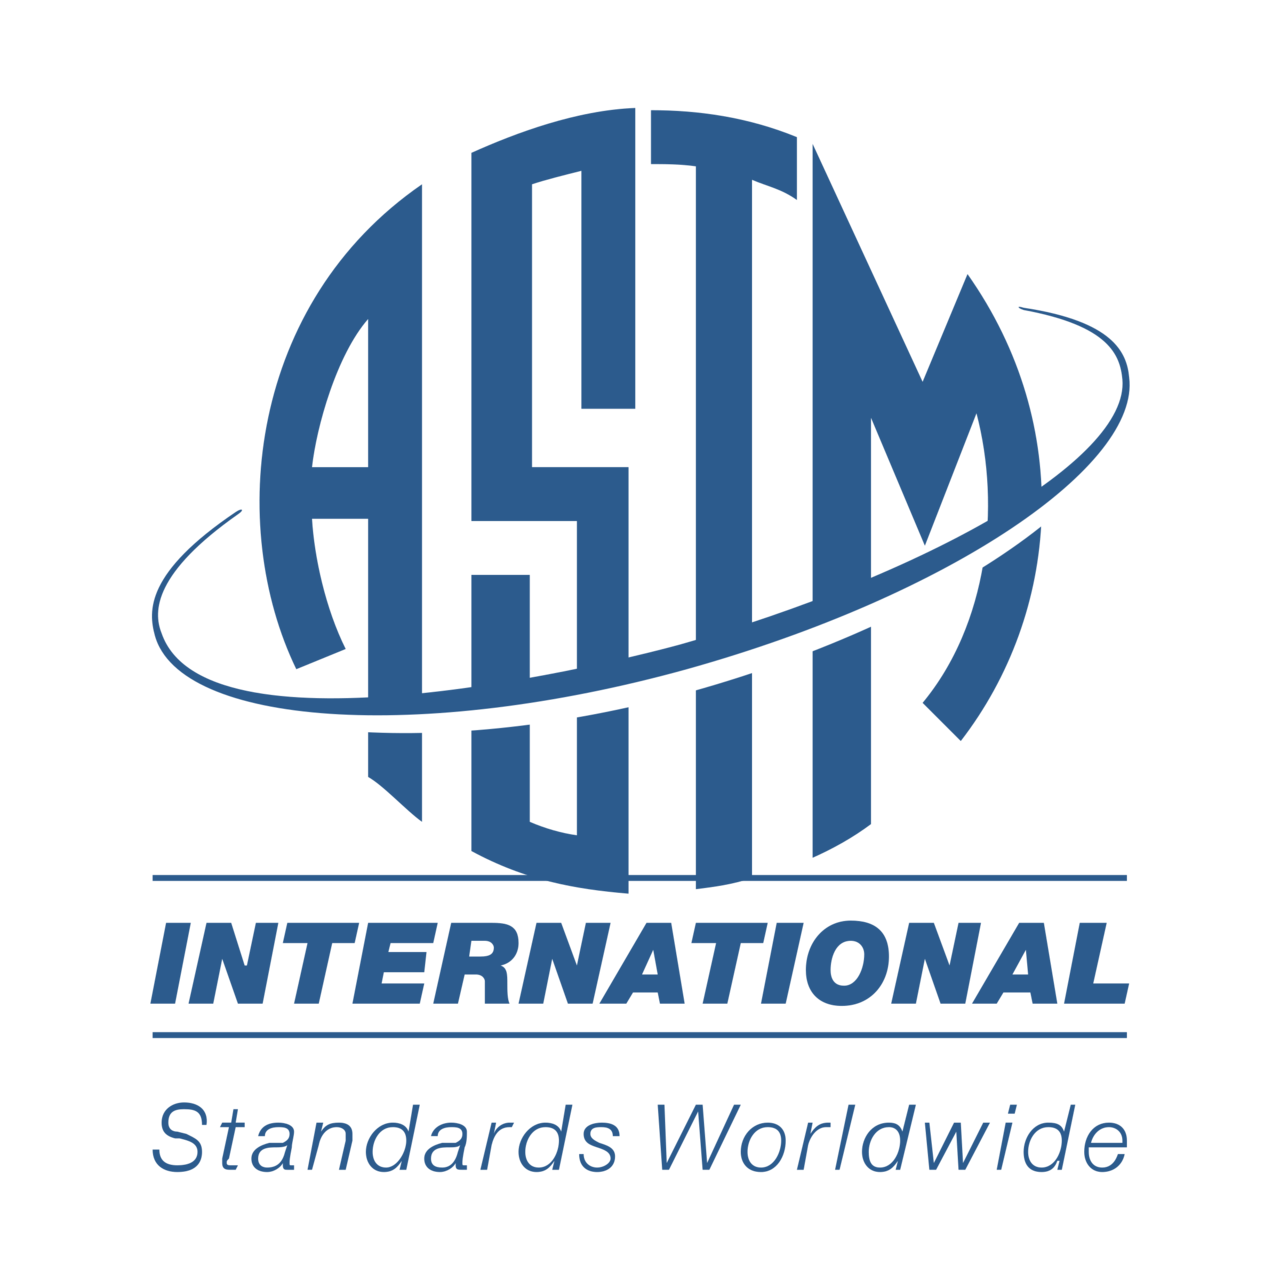 astm-international-logo